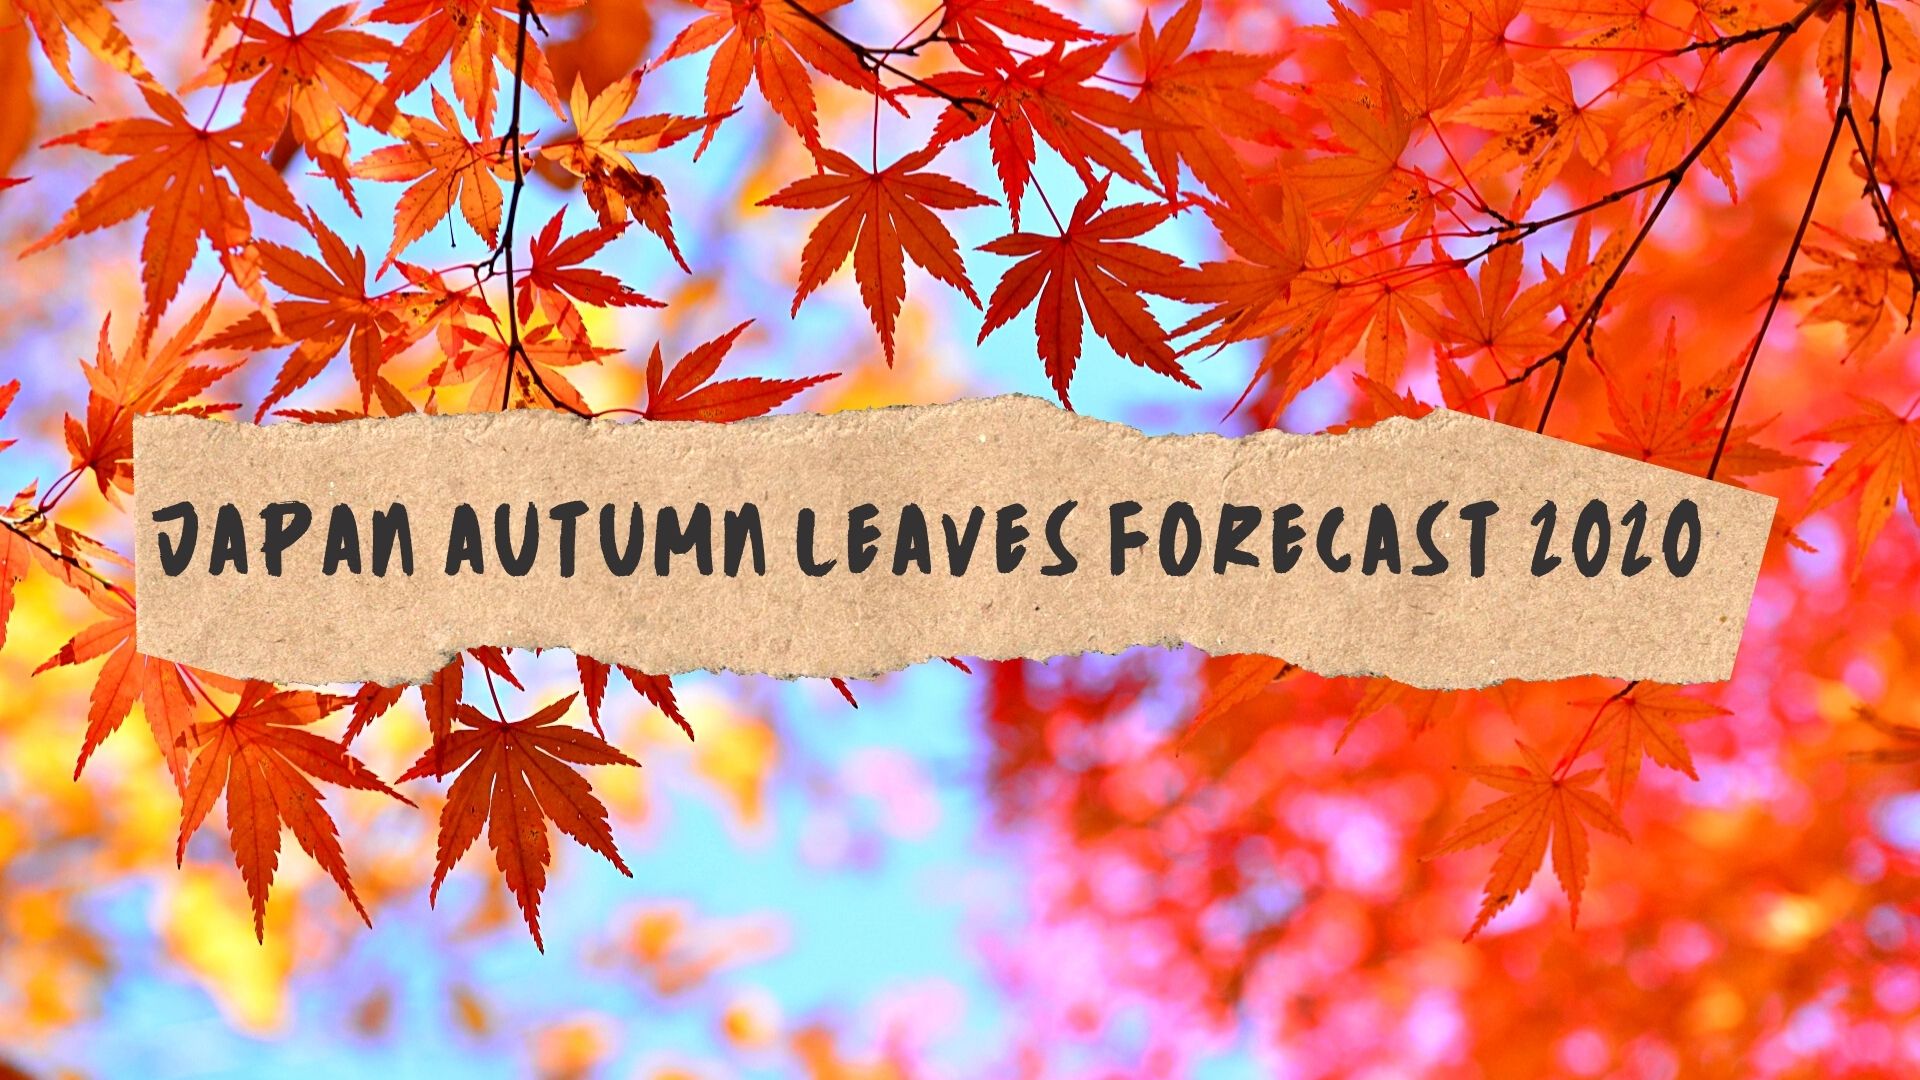 Japan Autumn Leaves Forecast